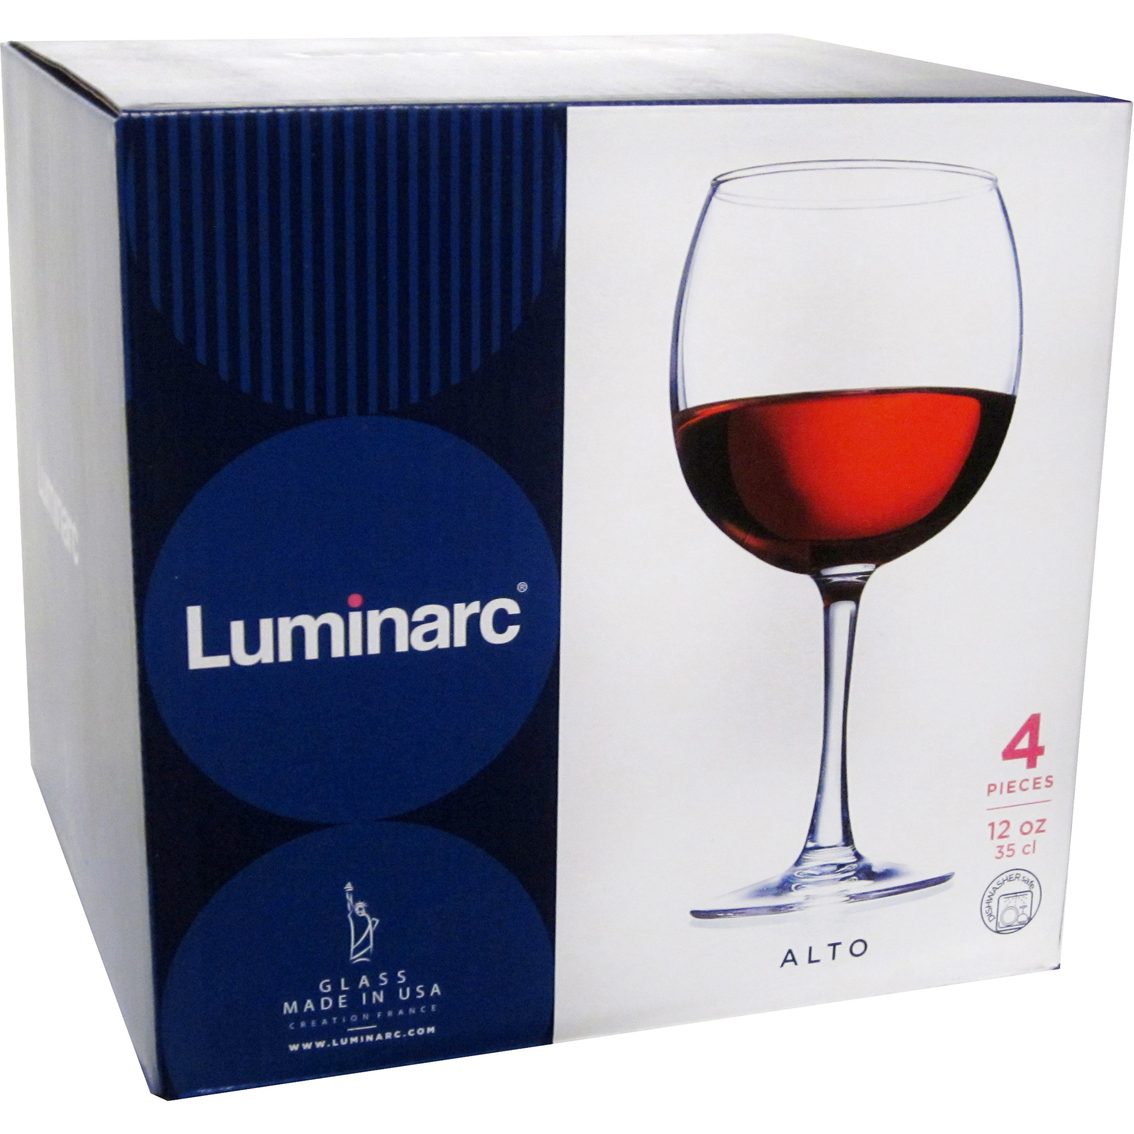 Arc International Alto By Luminarc 12 oz. Red Wine Glasses 4 pc. Set - Image 4 of 5